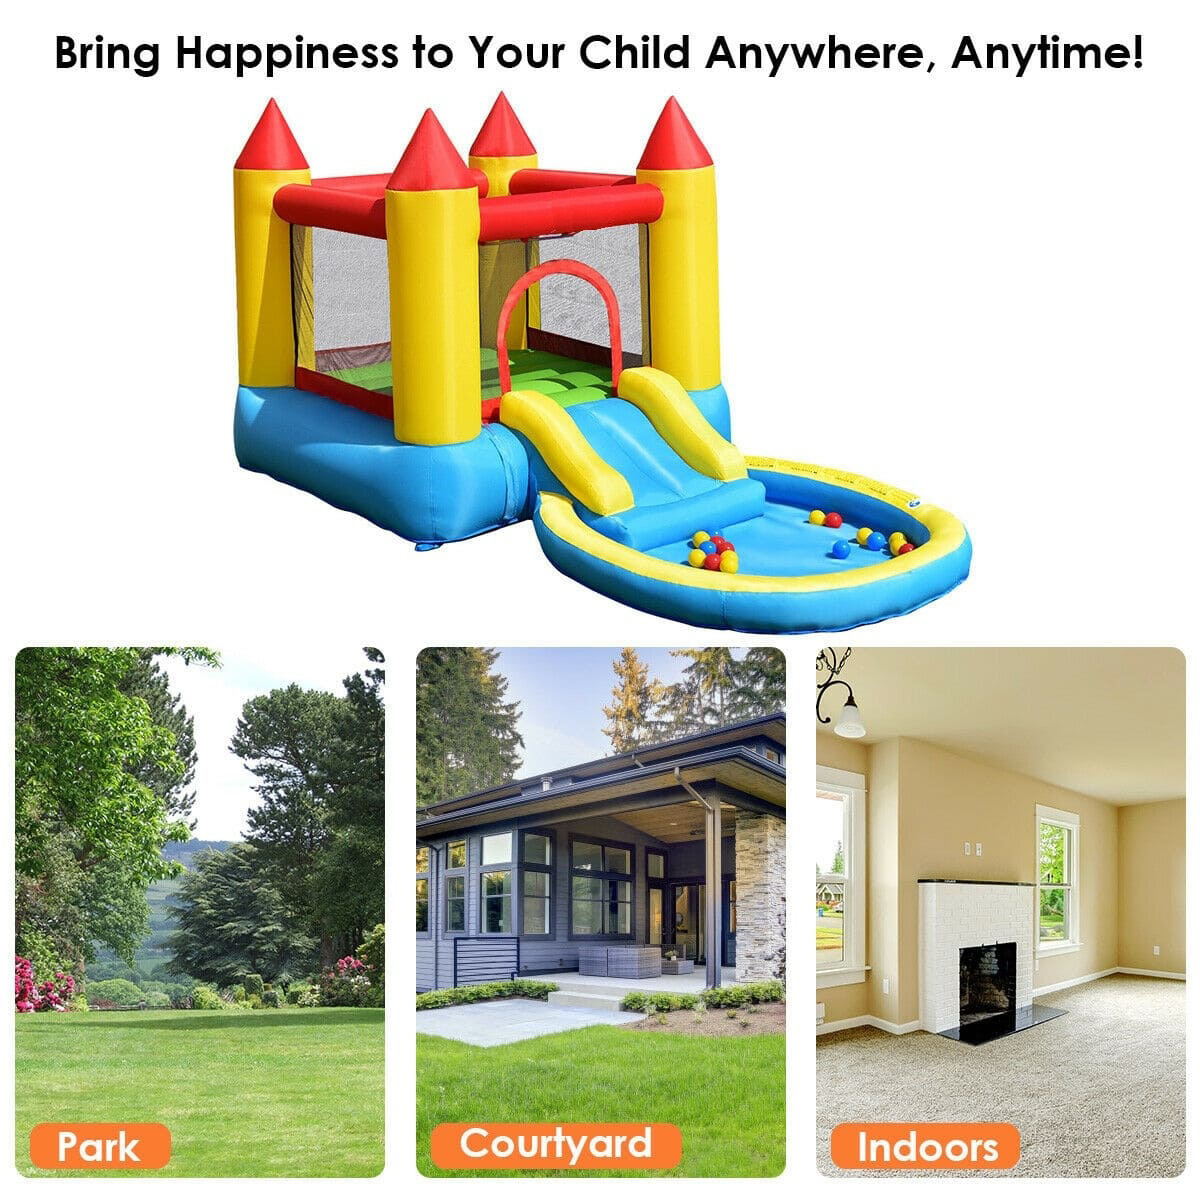 Inflatable Kids Mini Castle Slide Splash Pool Bounce House Blower Not Included